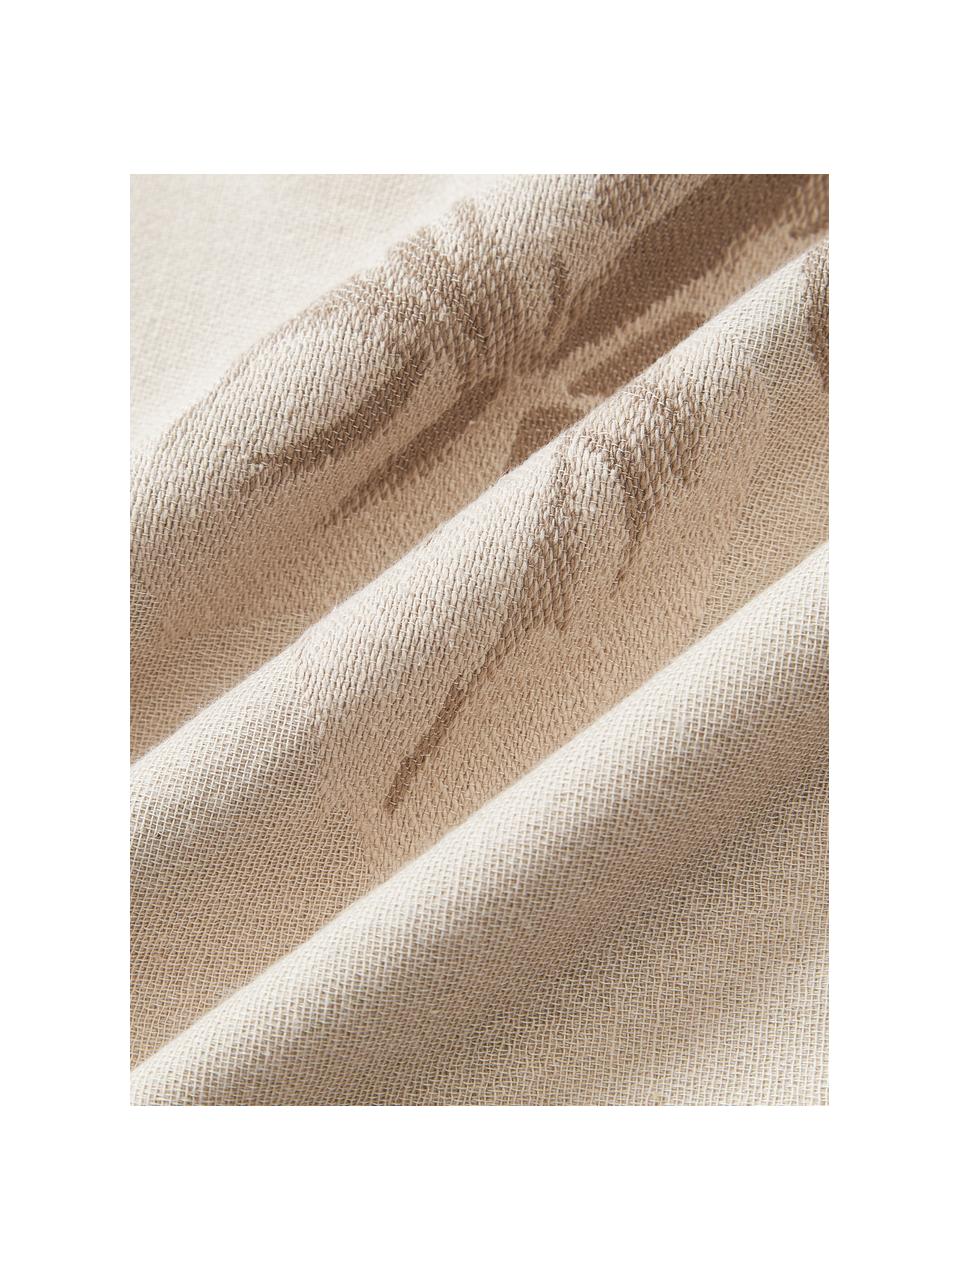 Baumwoll-Kissenhülle Breight mit gewebtem Jacquard-Muster, 100 % Baumwolle, Hellbeige, Braun, B 50 x L 50 cm